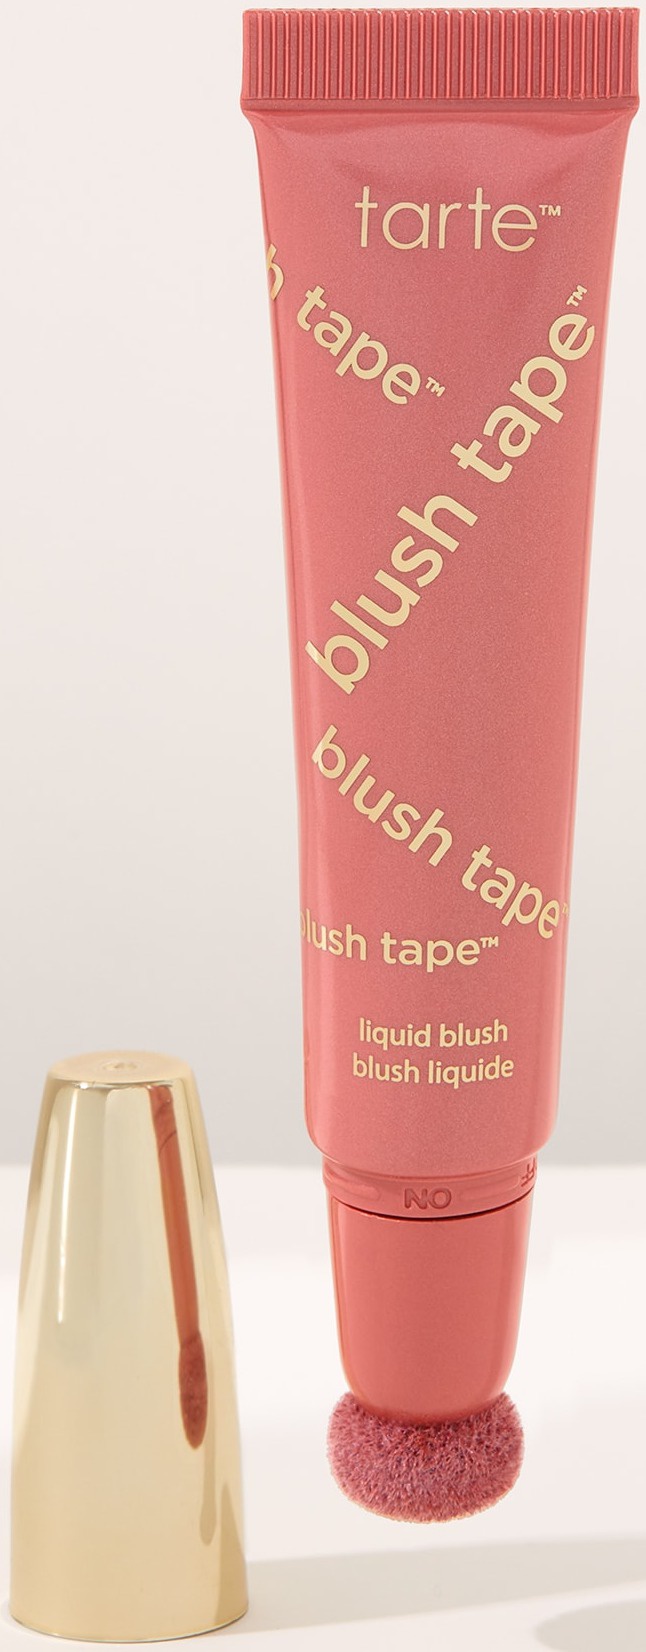 Tarte Blush Tape Liquid Blush